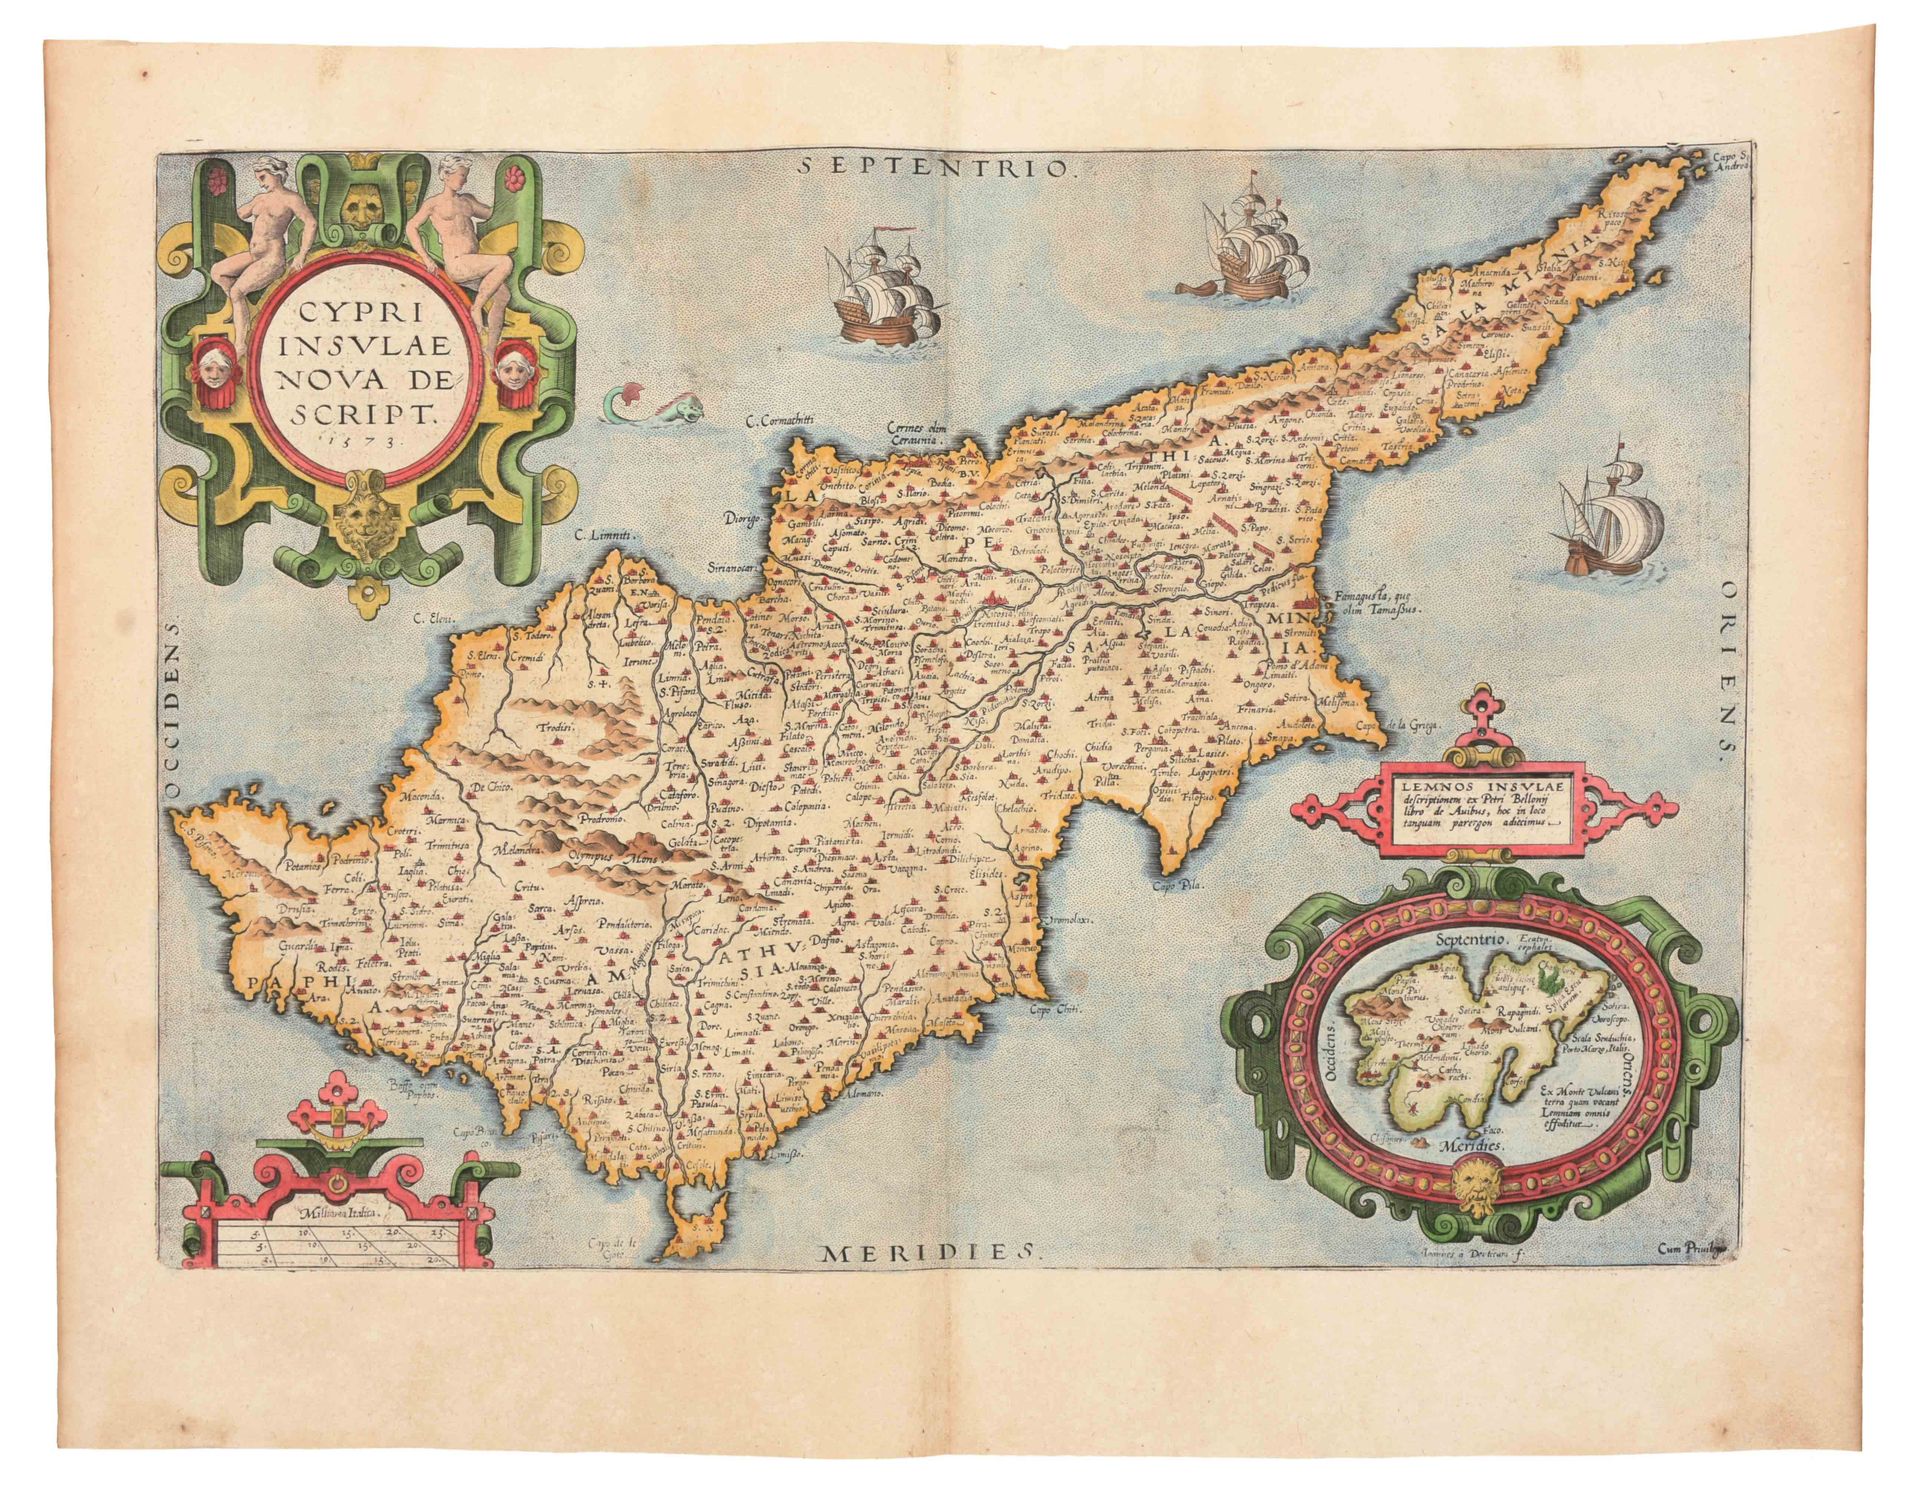 [CYPRUS] Cypri insulae nova descriptio (1573)

奥特留斯的手绘地图（35 x 50厘米）（安特卫普，约1590）。&hellip;